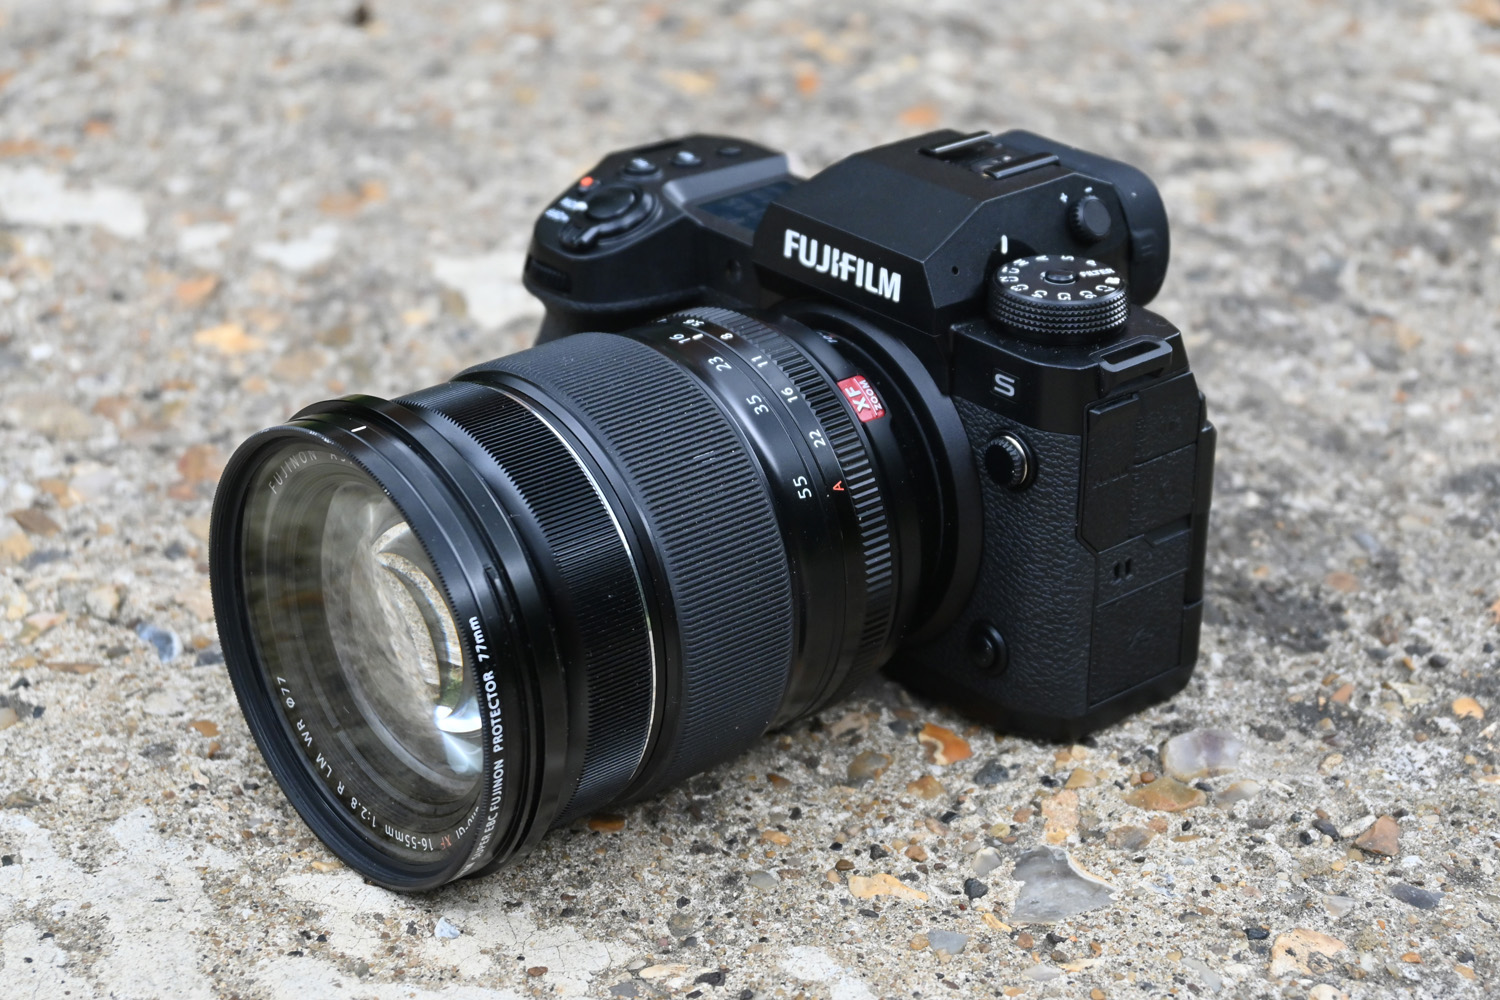 Fuji X-H2S digital system camera with lens